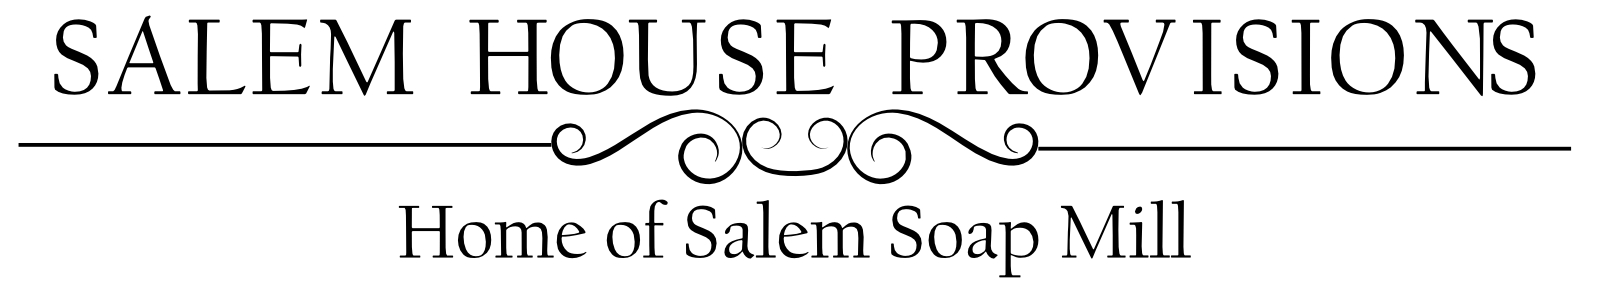 Salem House Provisions